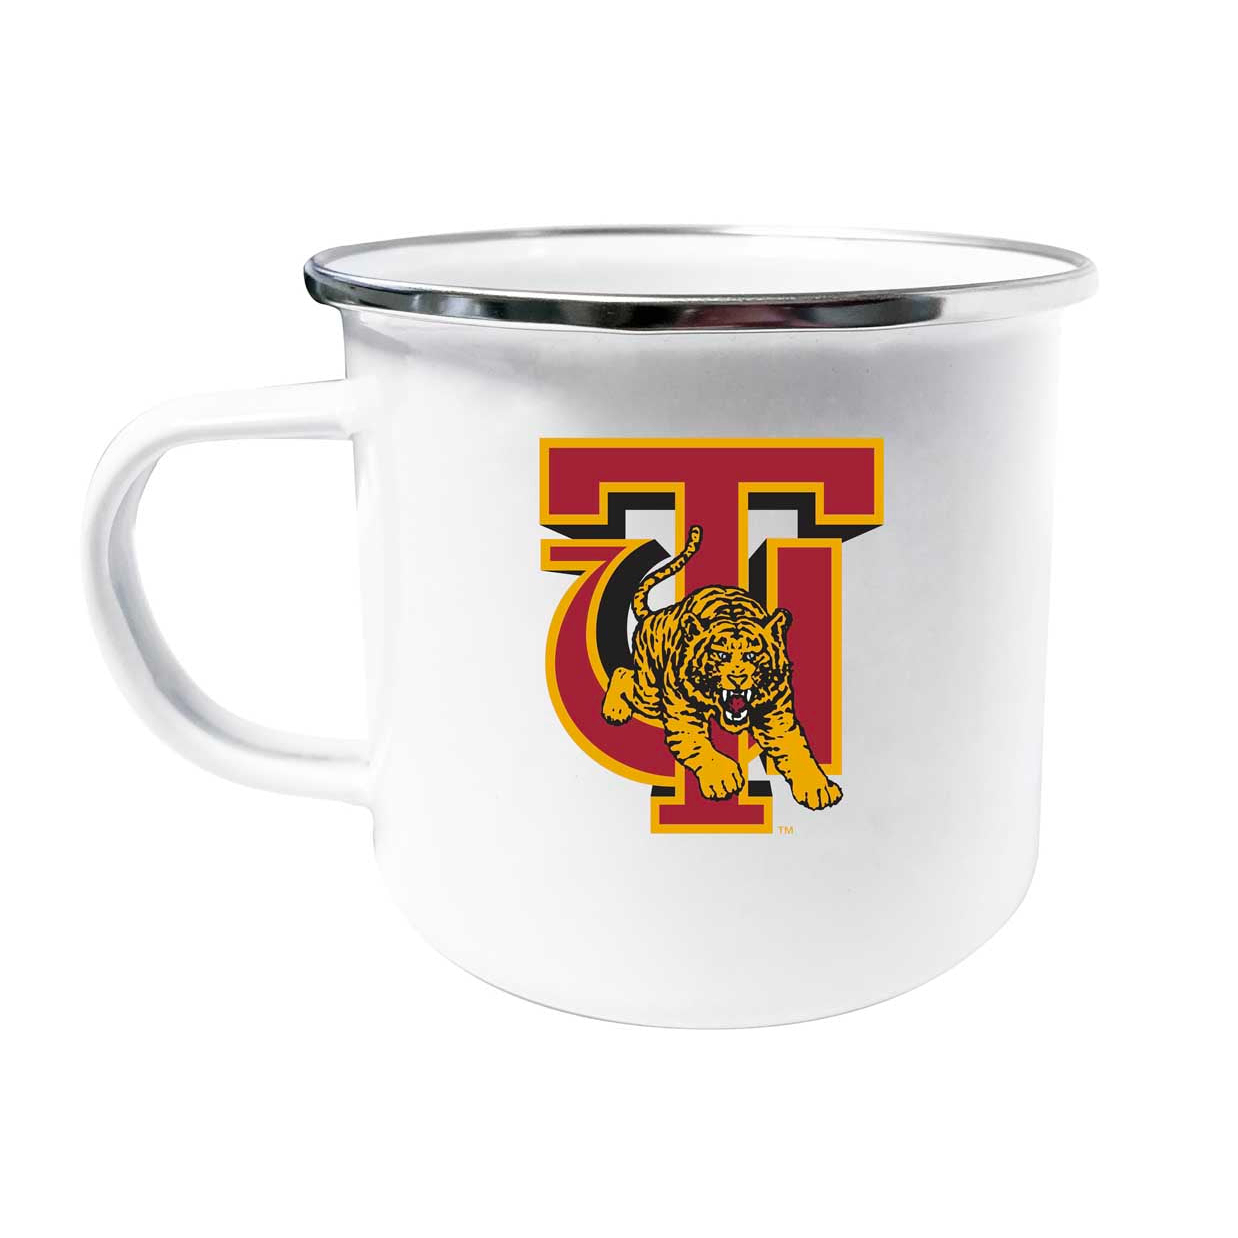 Tuskegee University Tin Camper Coffee Mug - Choose Your Color - White